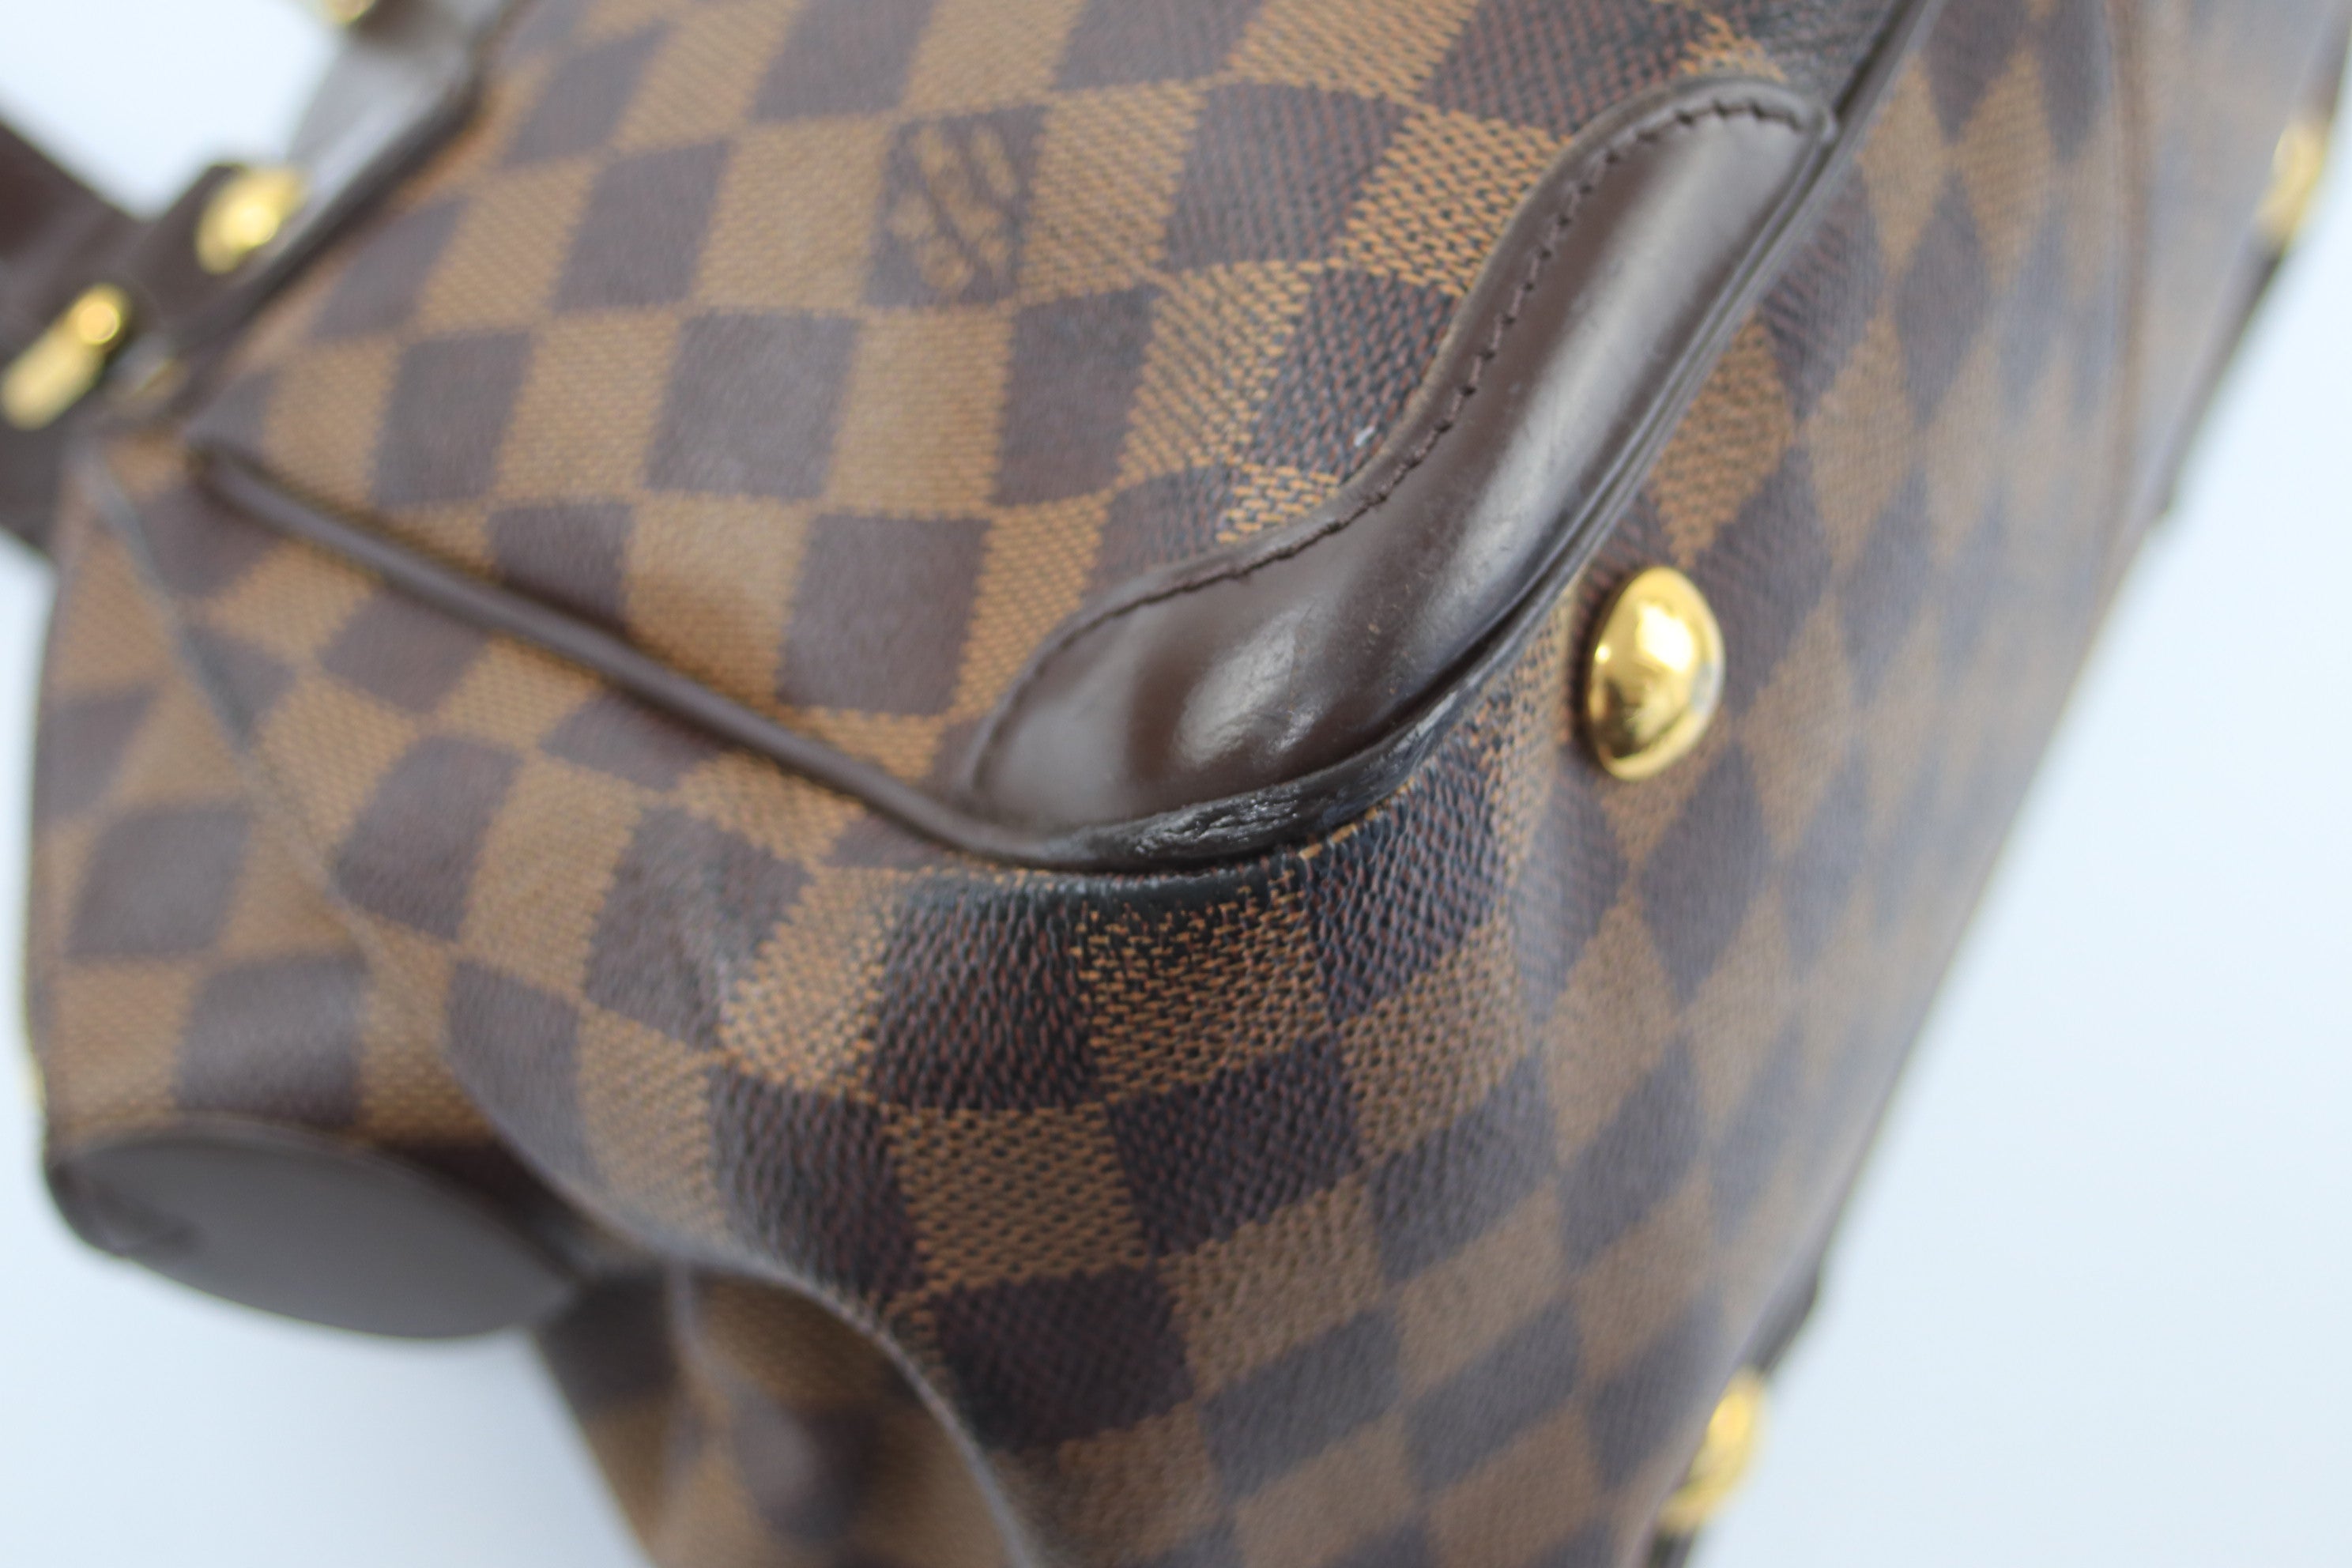 Louis Vuitton Eole 50 Damier Ebene Rolling Luggage bag Used (3788)